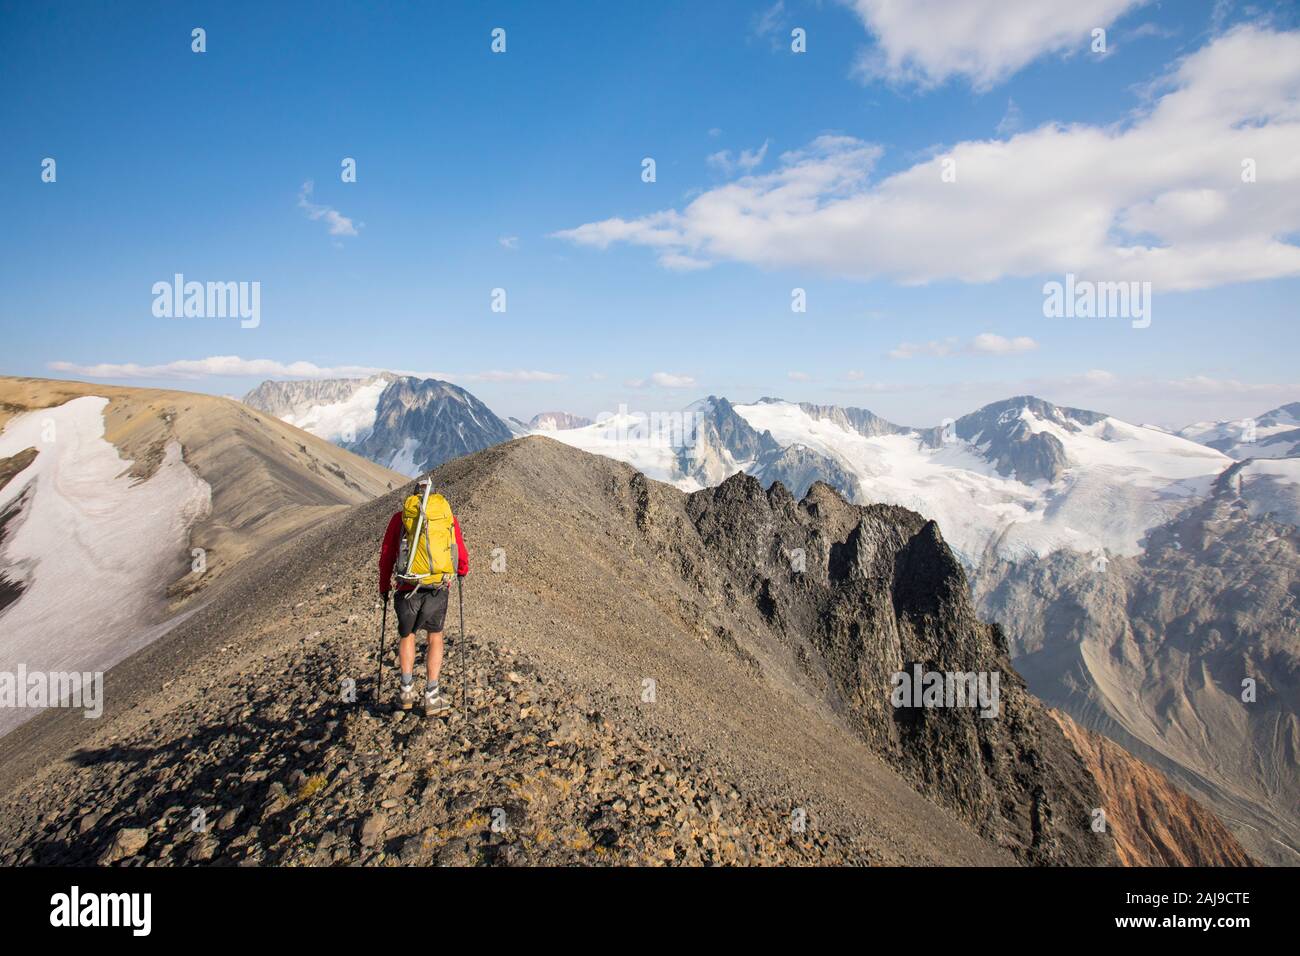 Rear view of backpacker hiking on rocky summit ridge. Stock Photo